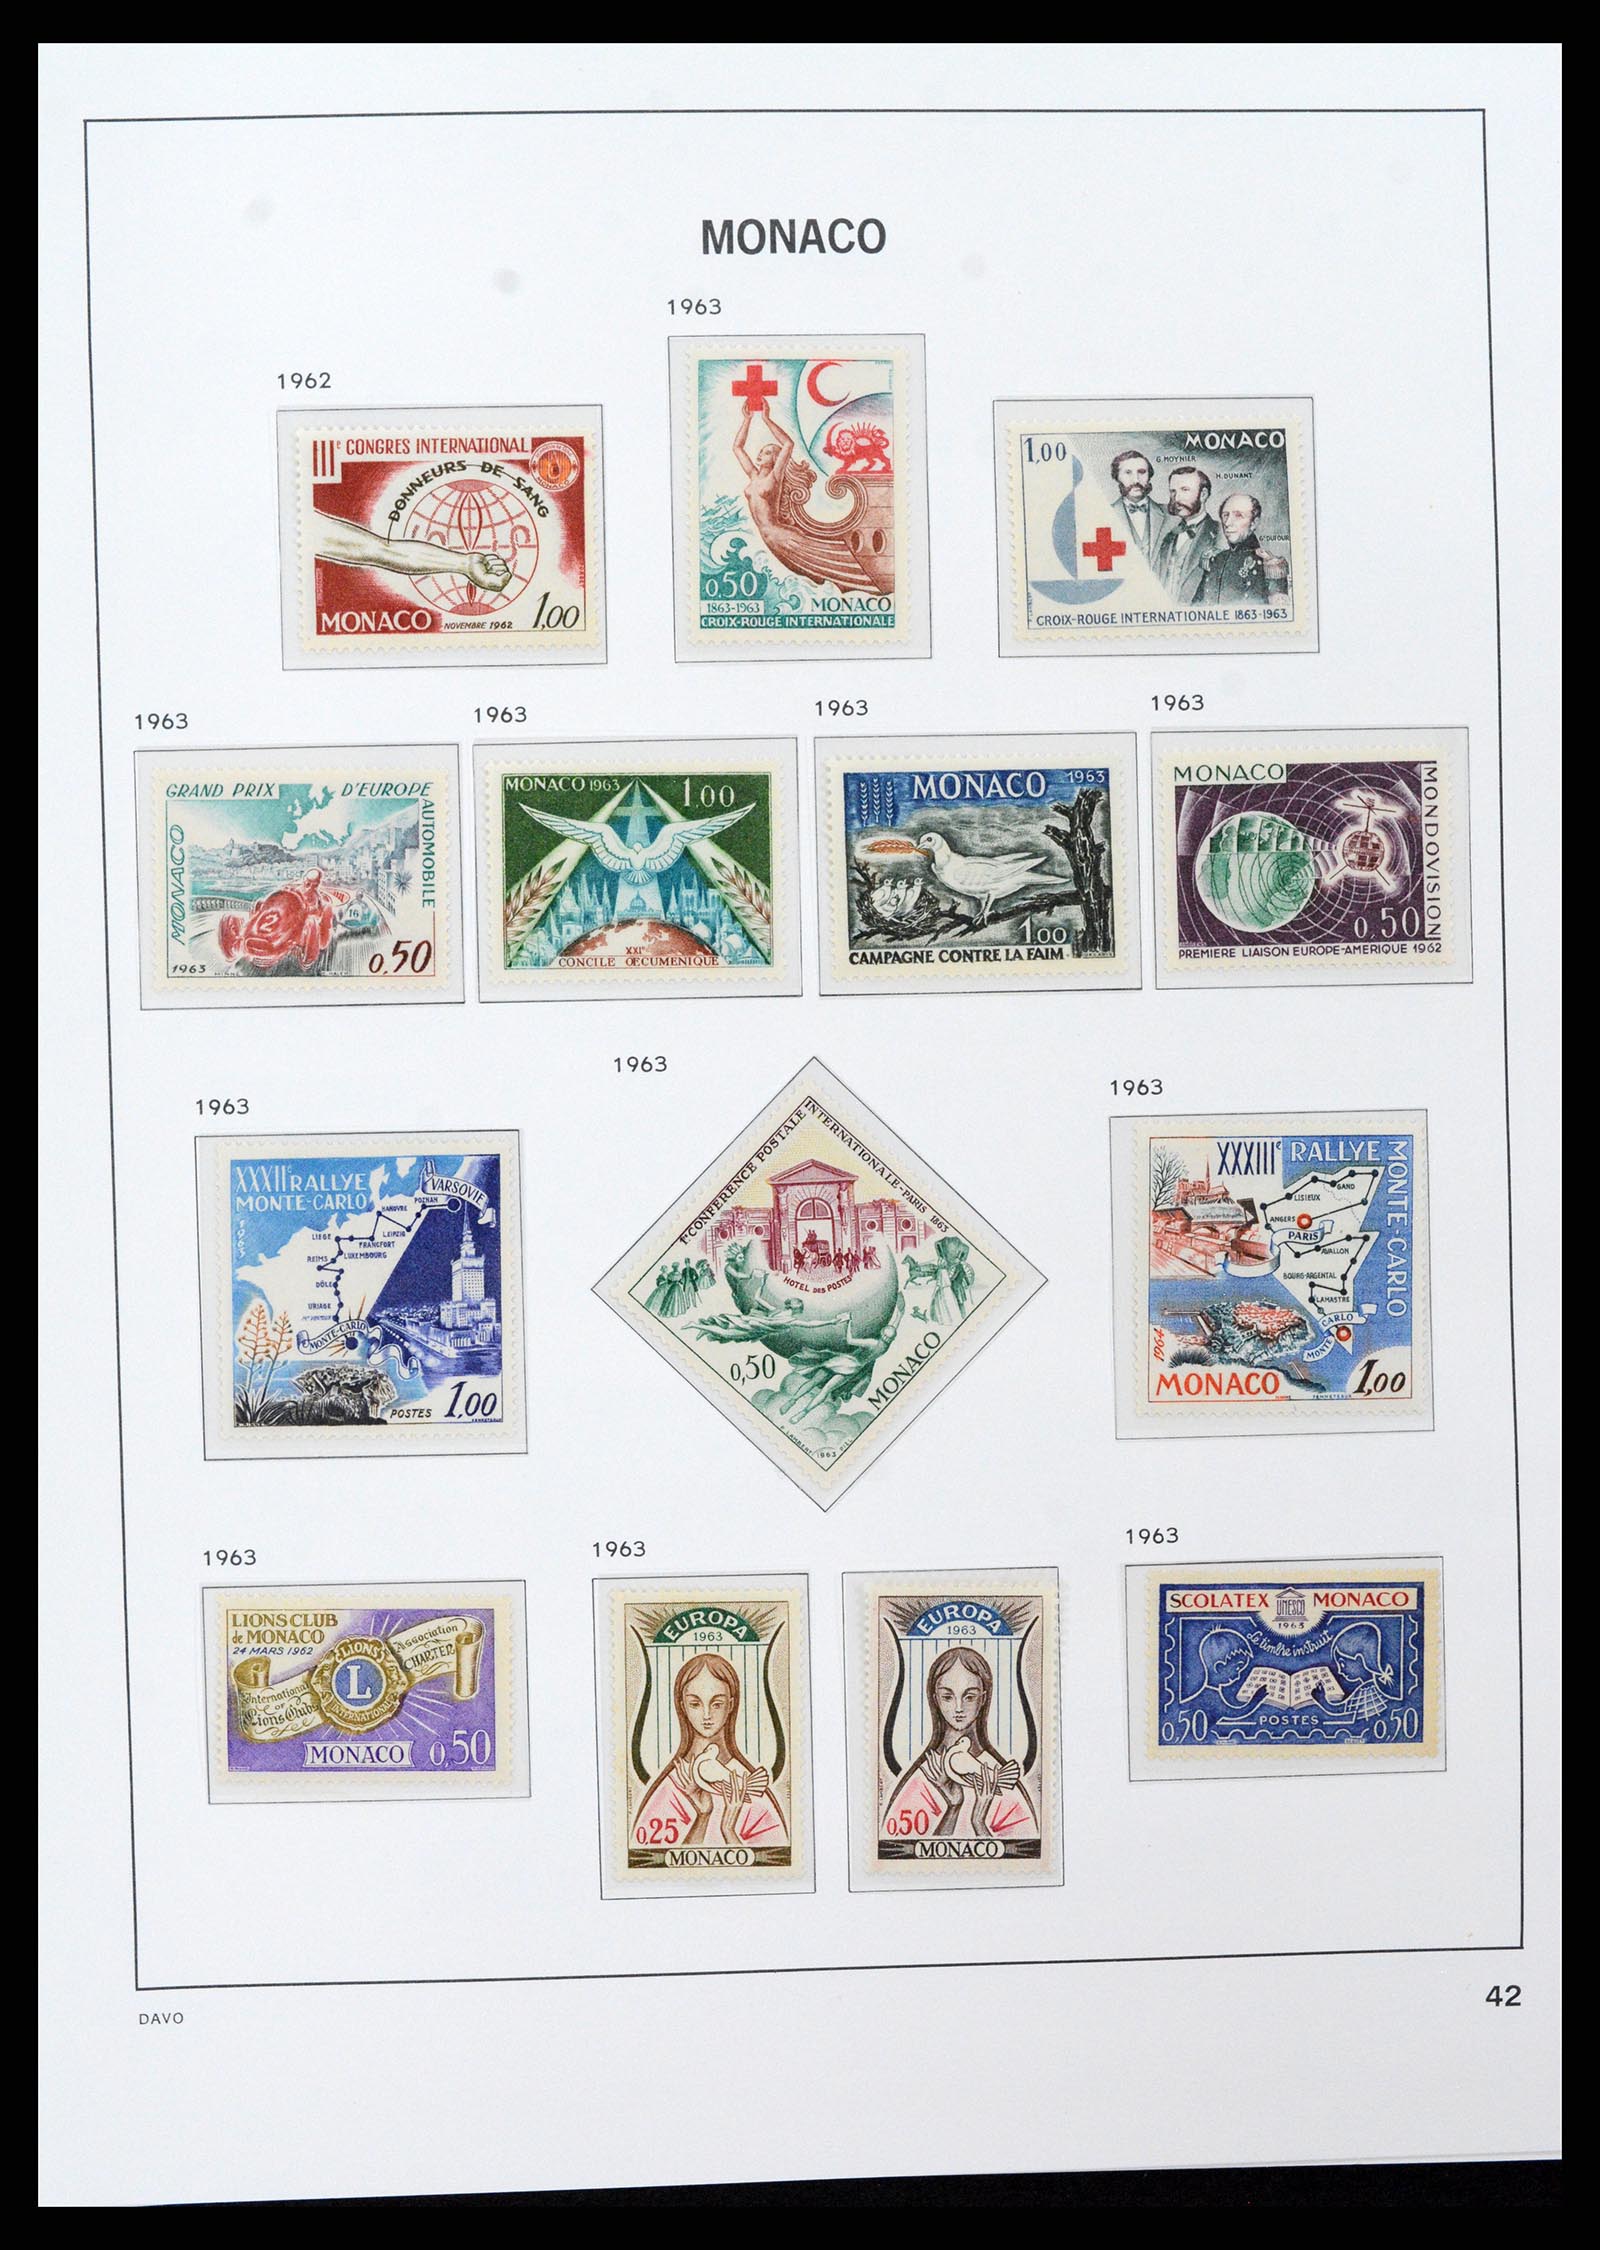 37279 042 - Stamp collection 37279 Monaco 1885-1969.